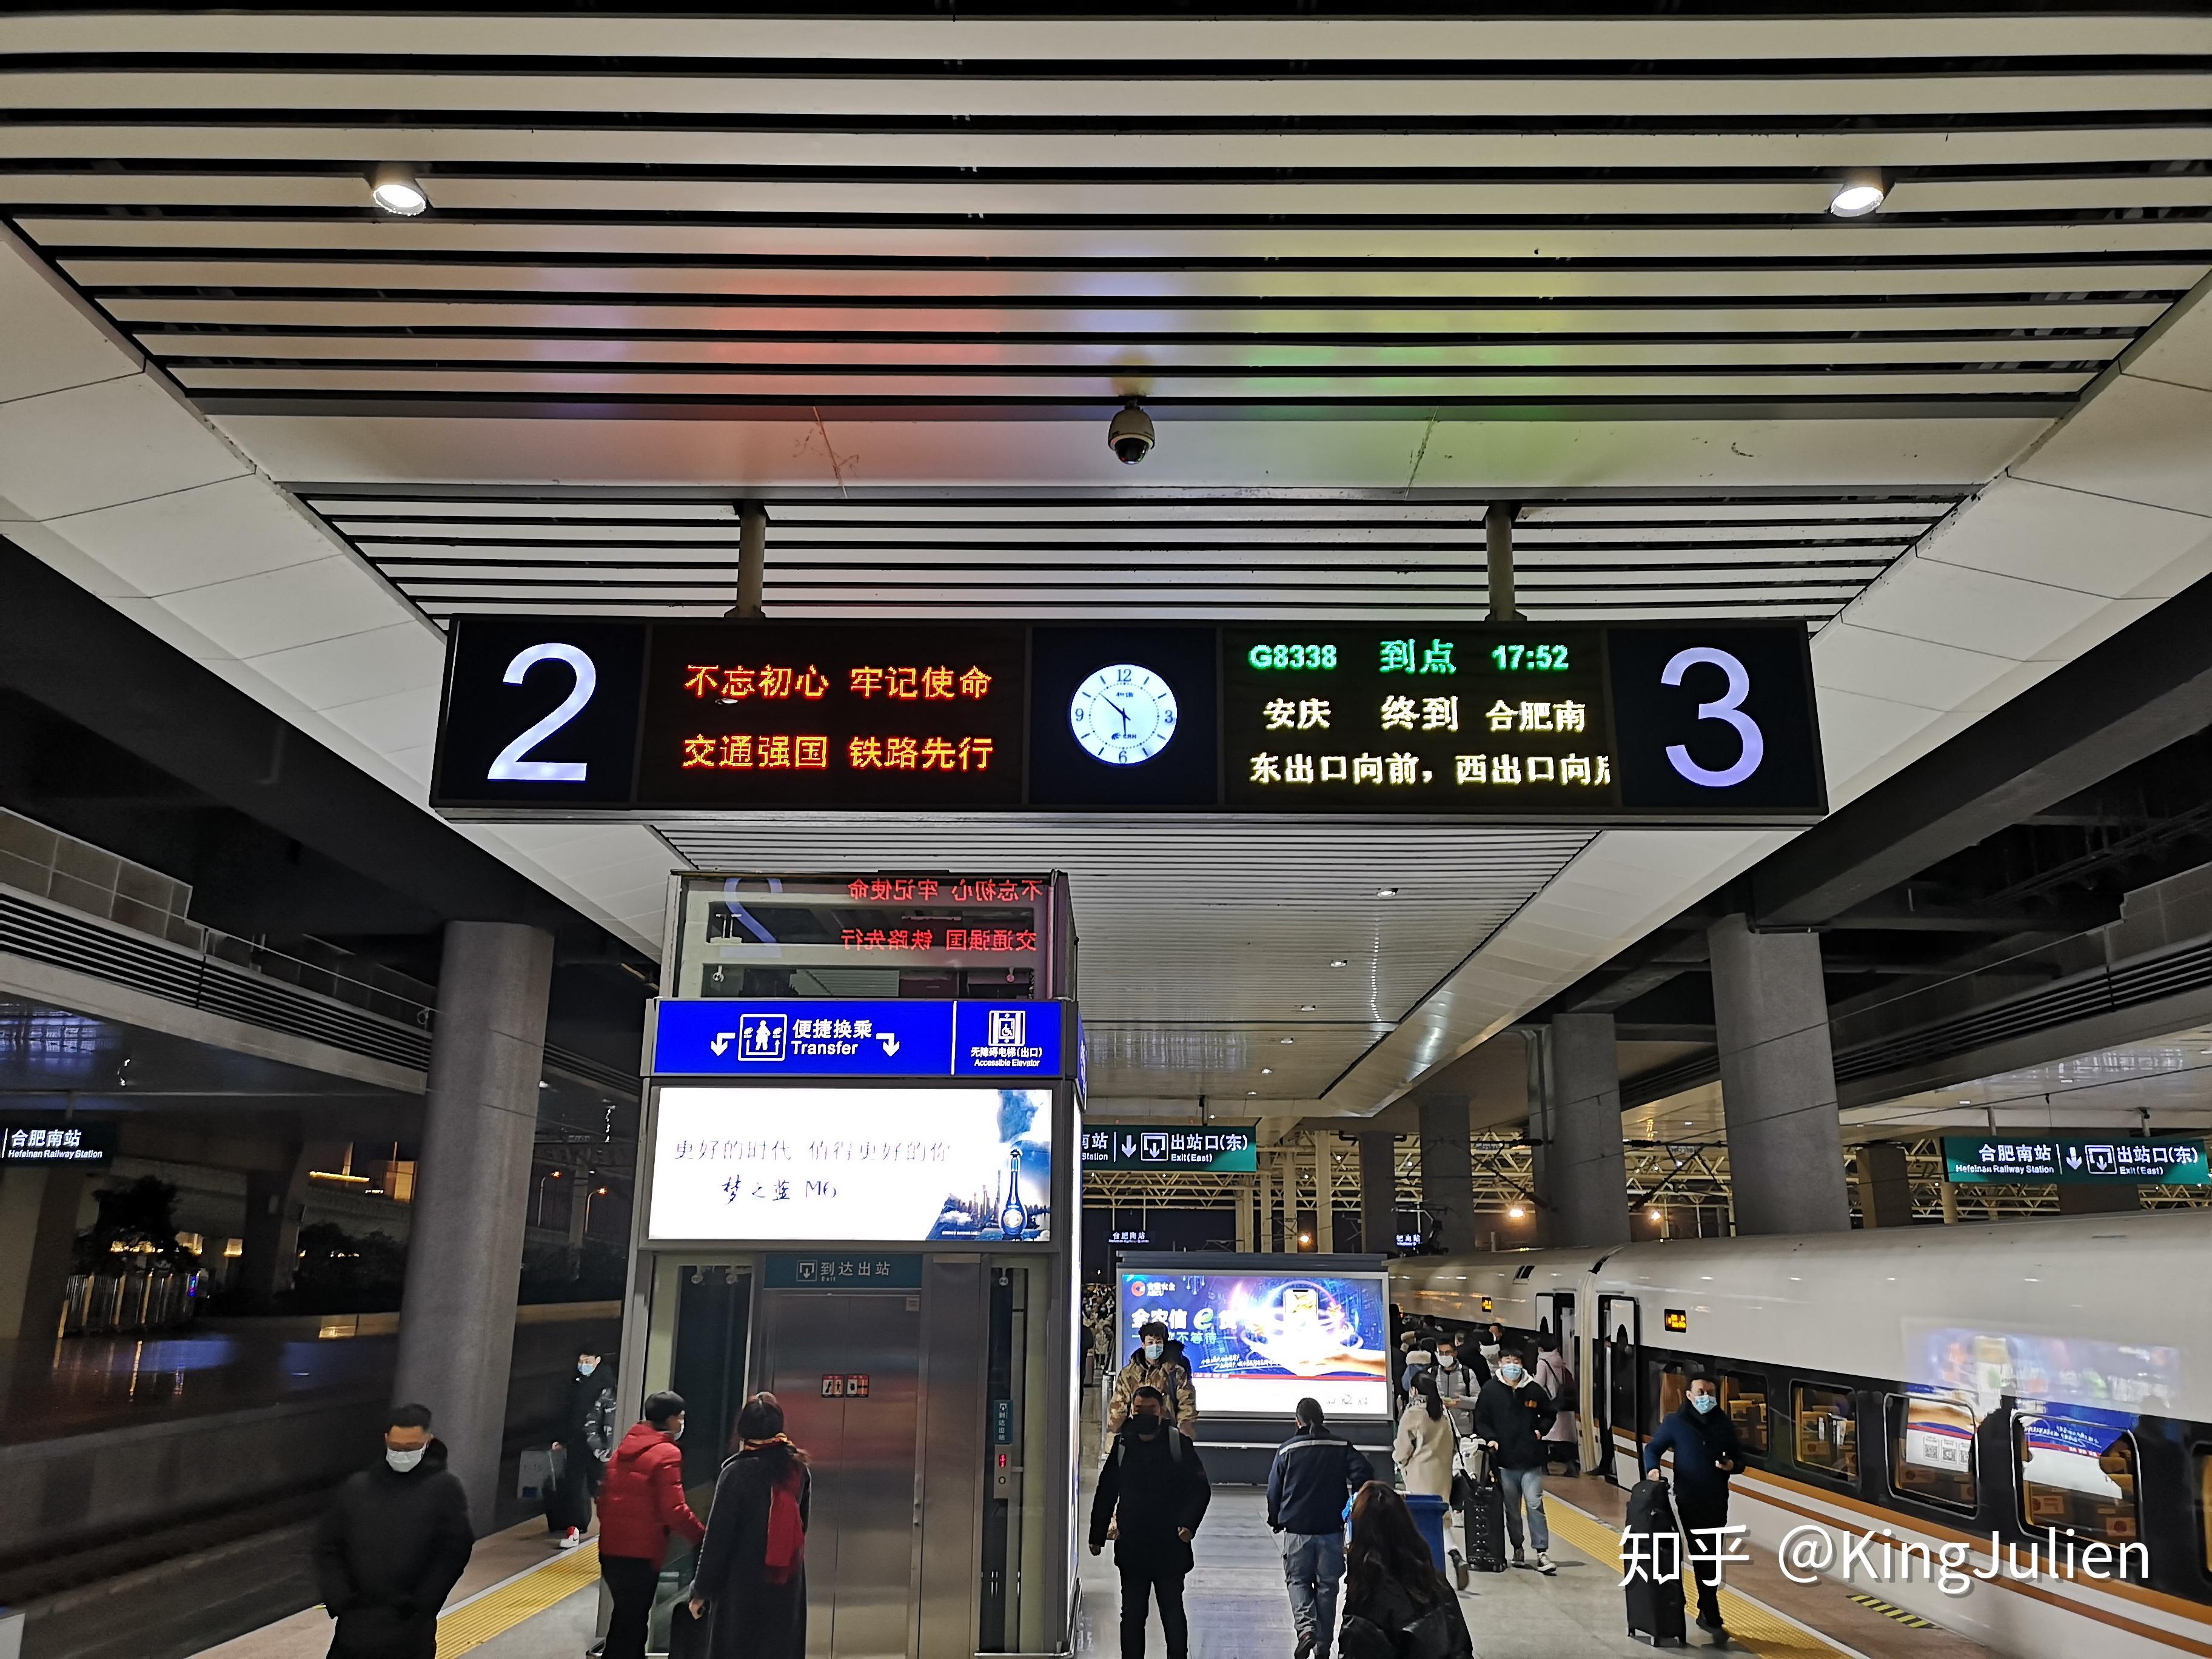 g8338到达合肥南站后记随着铁路出行客流的增多,高铁站愈发成为能够